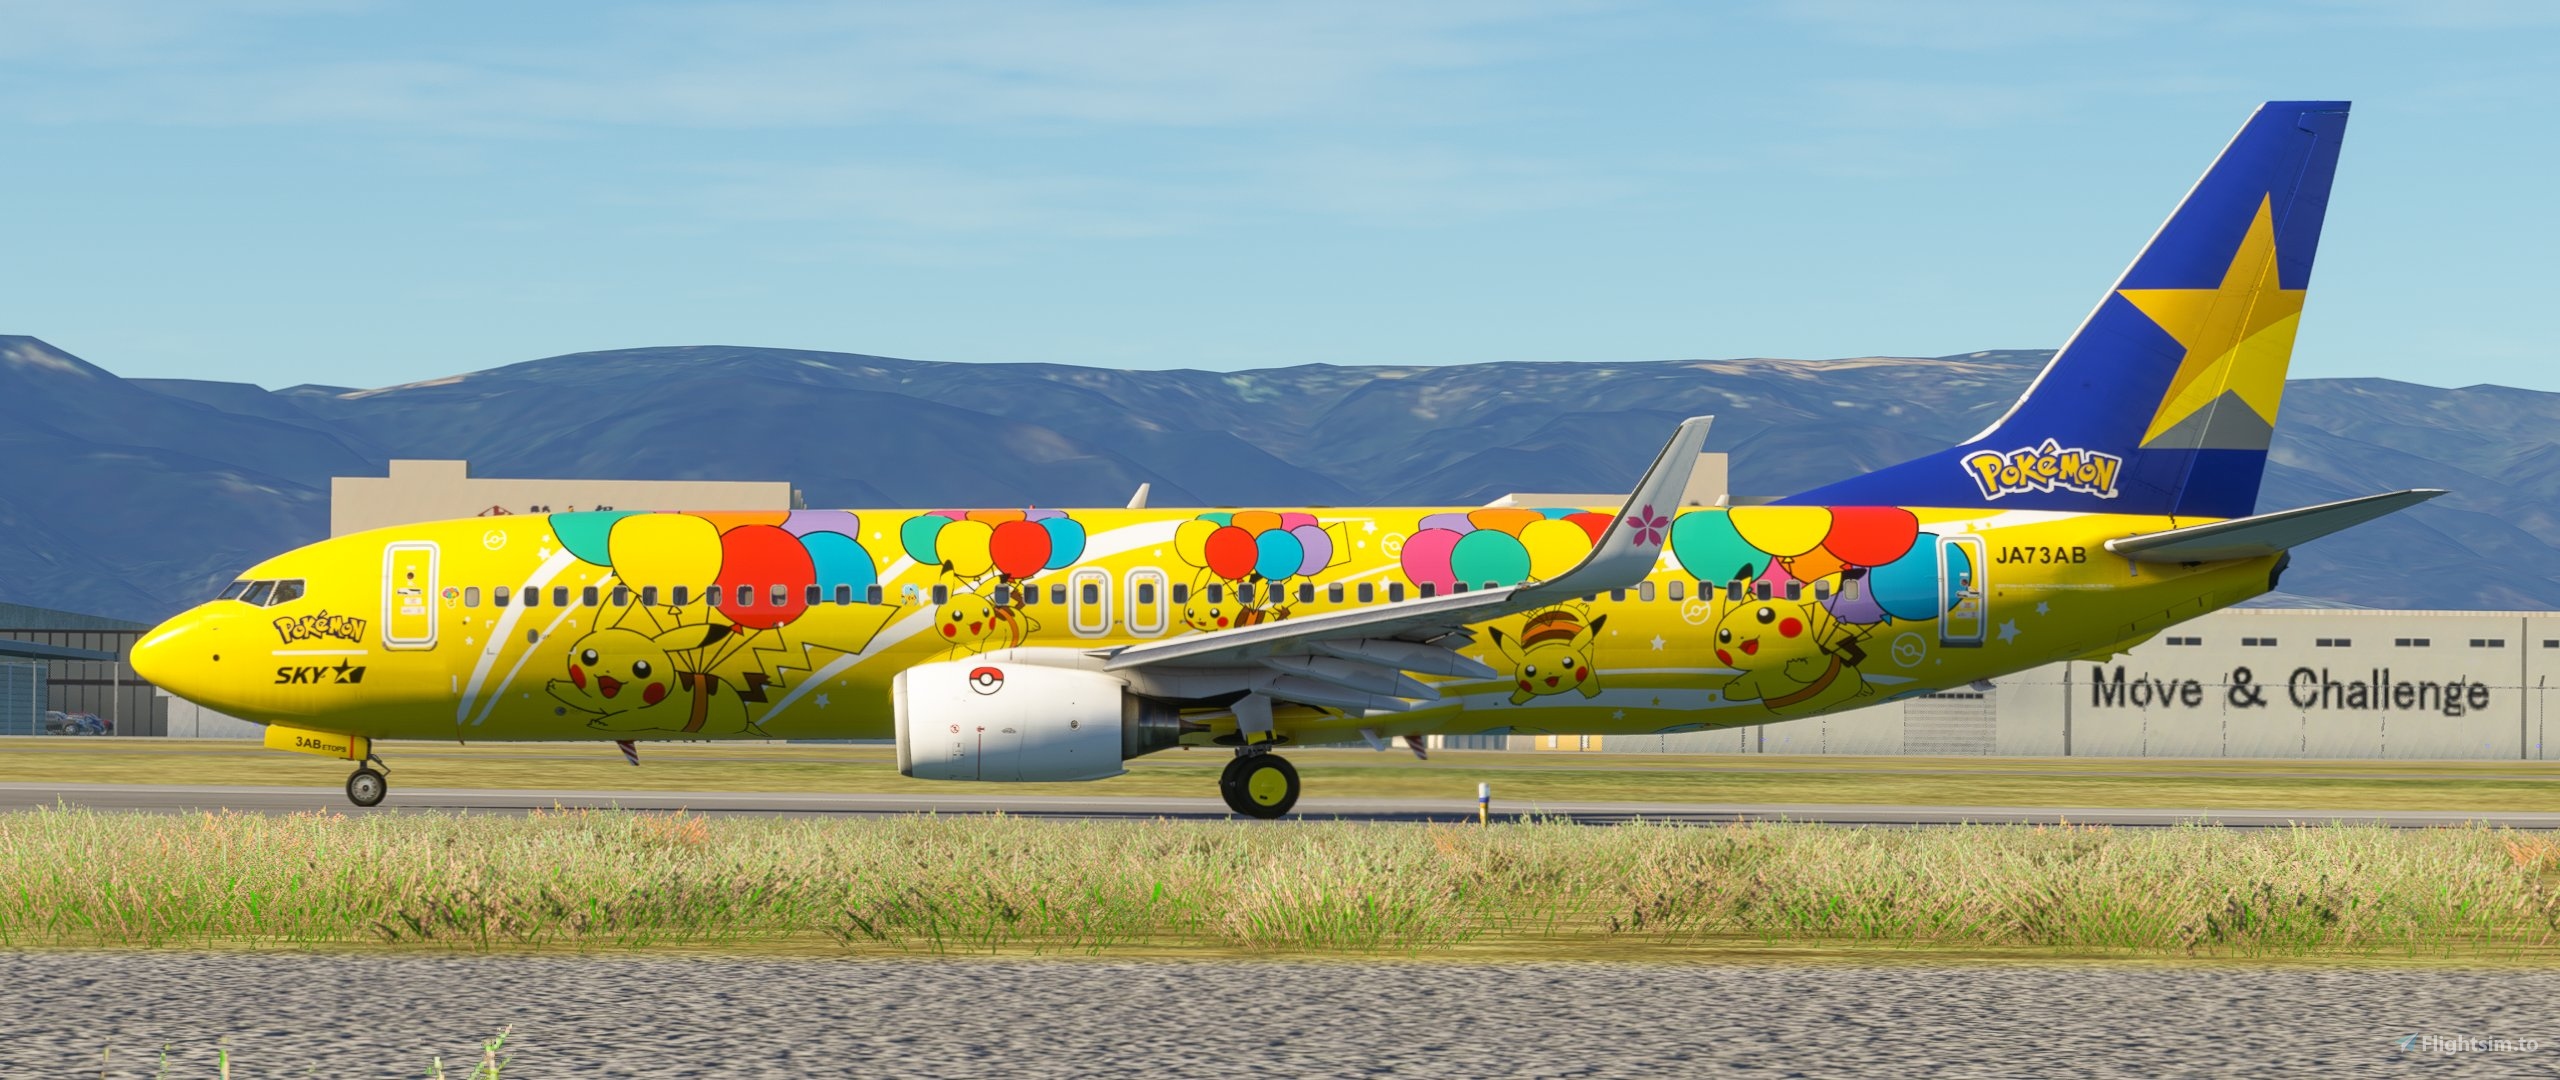 SKYMARK JA73AB Pikachu JET BC1 (2021) for Microsoft Flight 